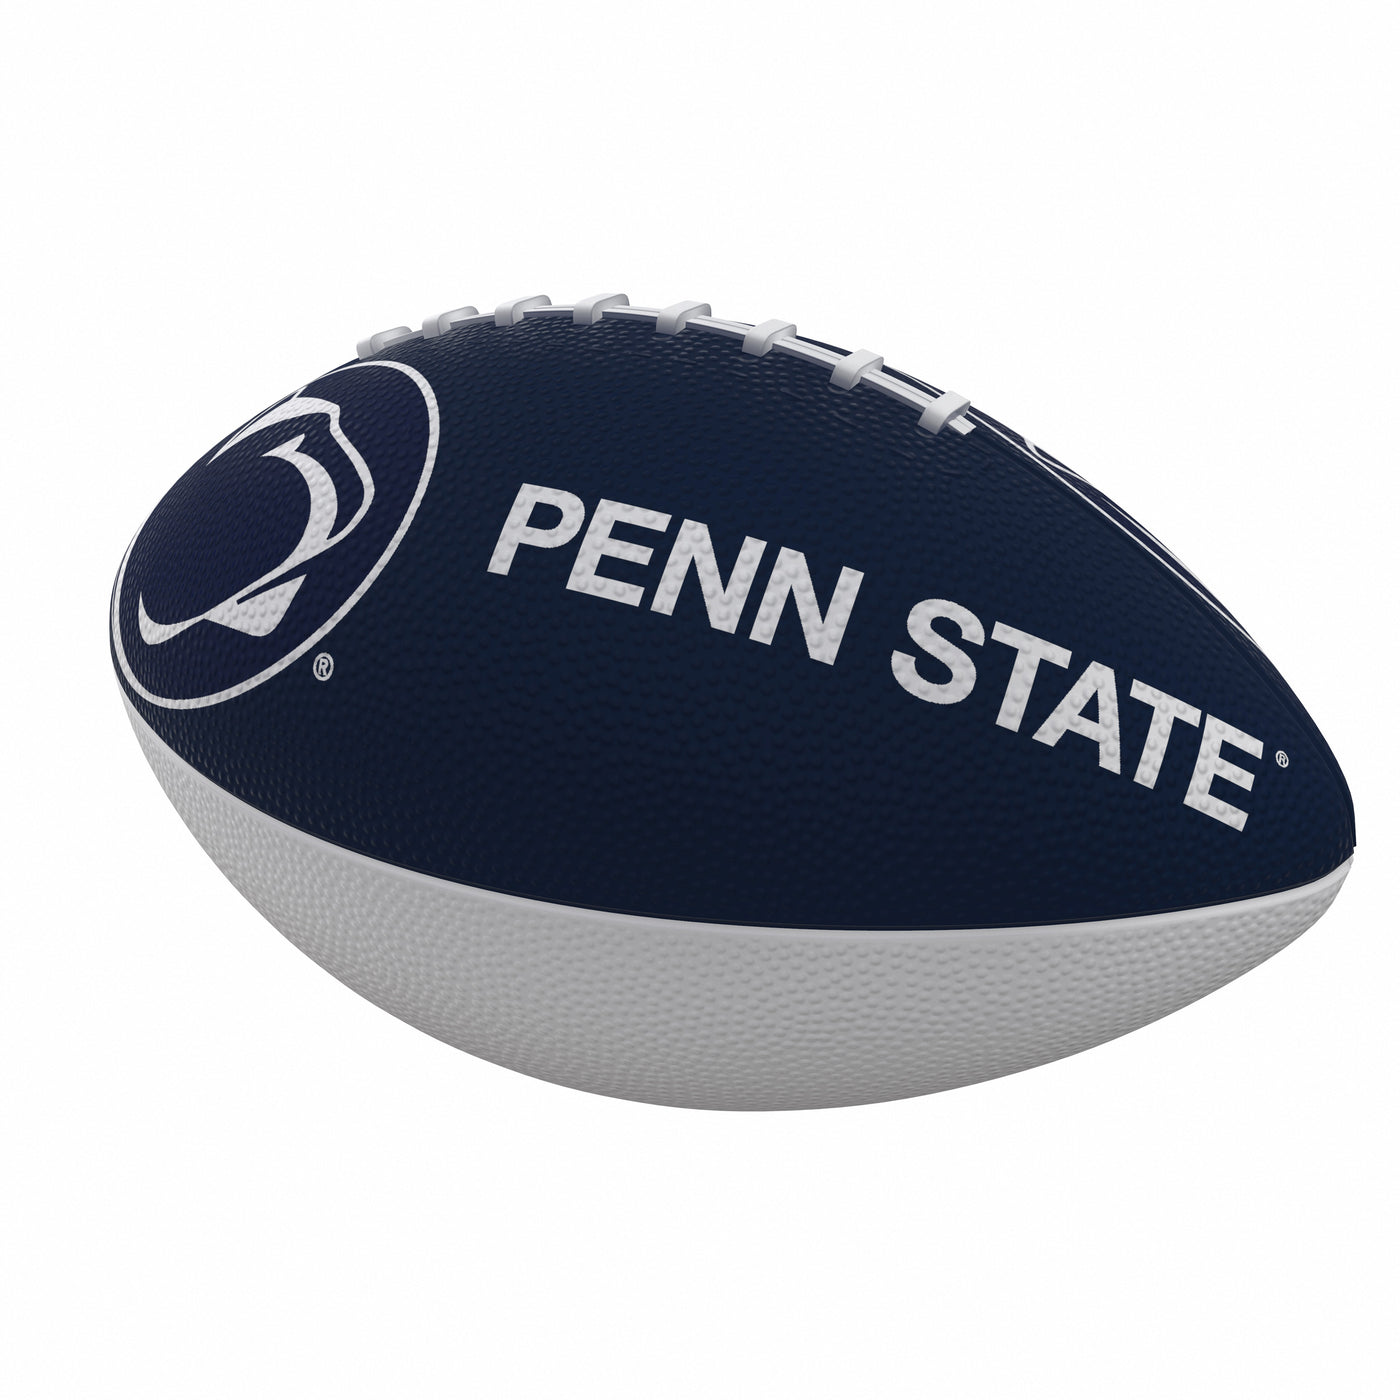 Penn State Combo Logo Junior-Size Rubber Football